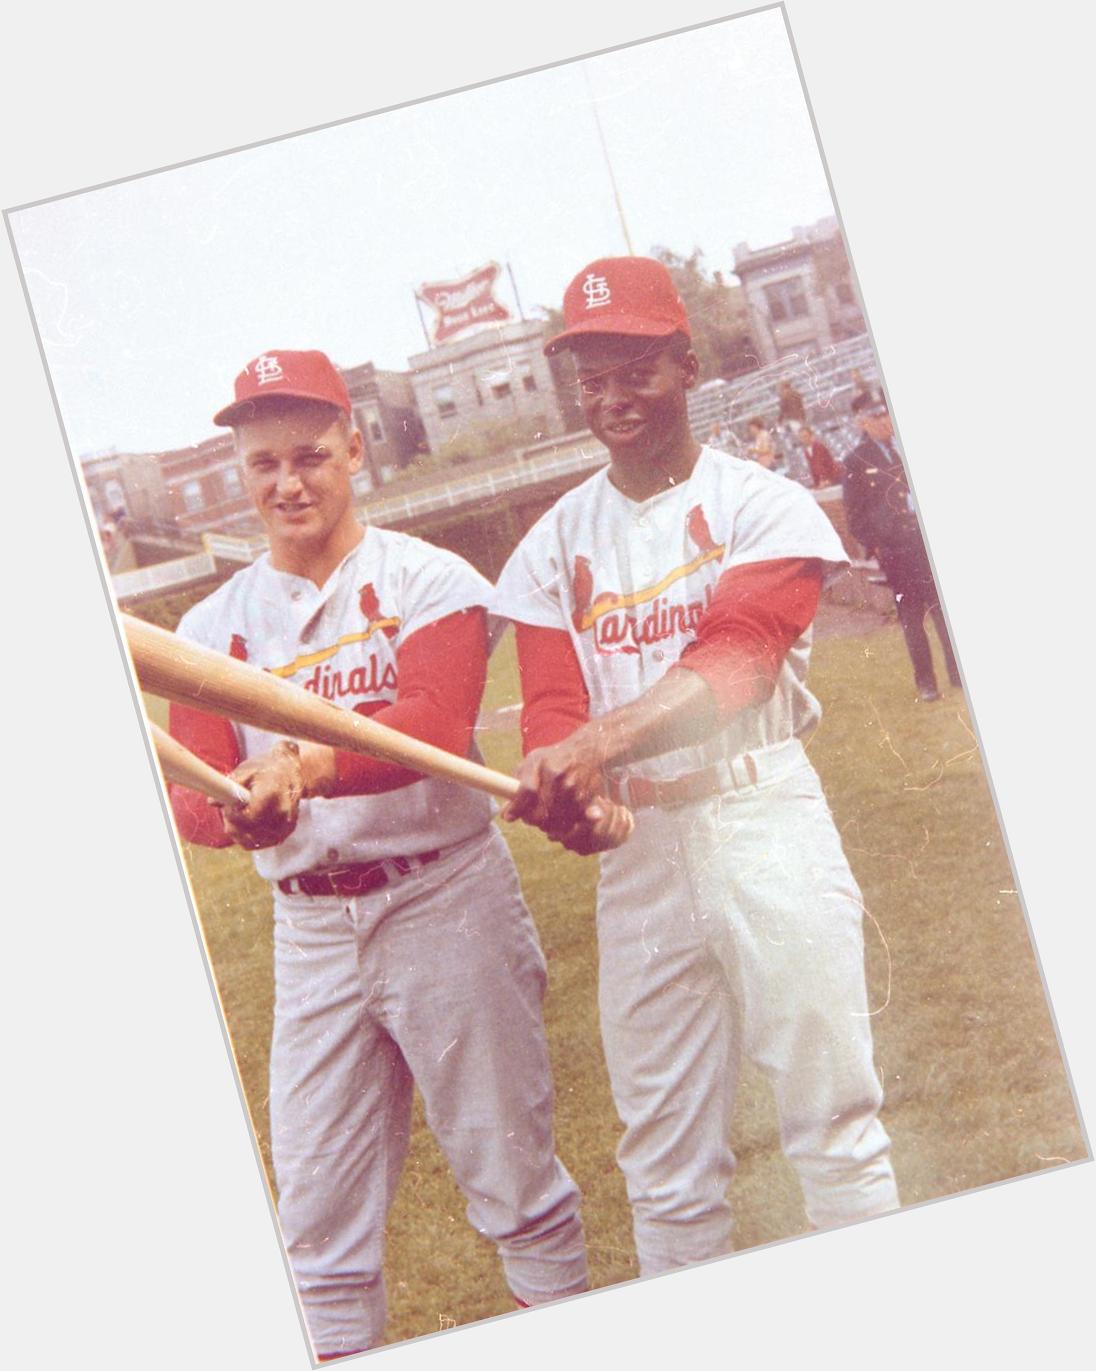 Happy Birthday Roger Maris! After his Yankees years, Maris spent 2 seasons (1967-1968) in St. Louis. 